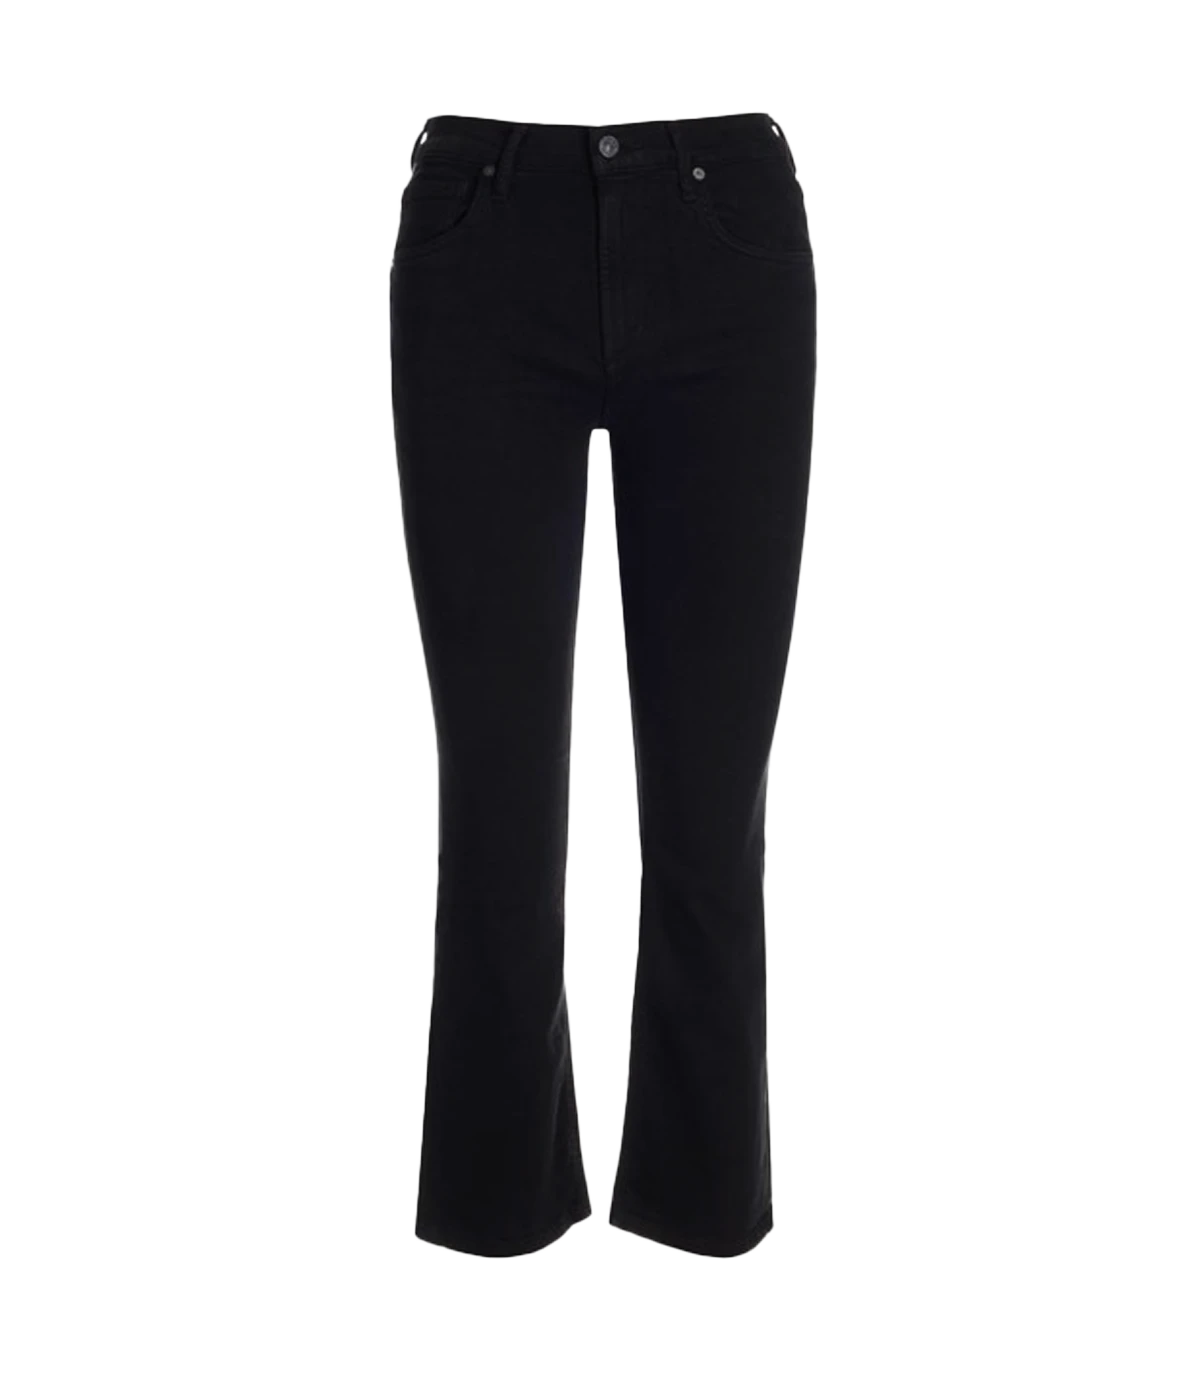 Isola Straight Crop Jean in Plush Black